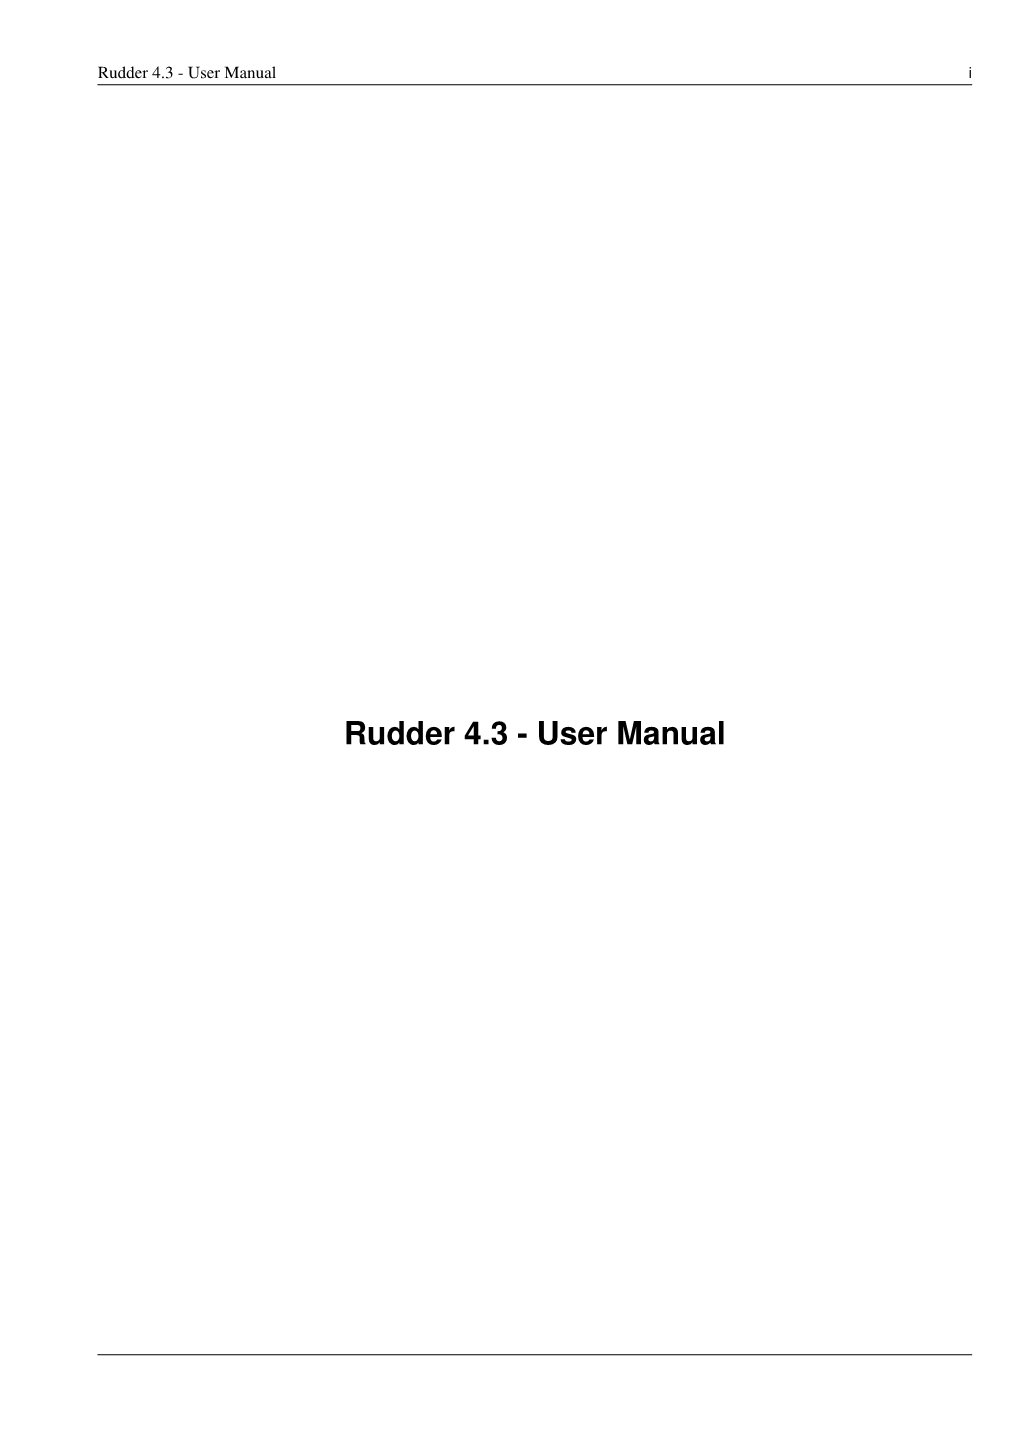 Rudder 4.3 - User Manual I